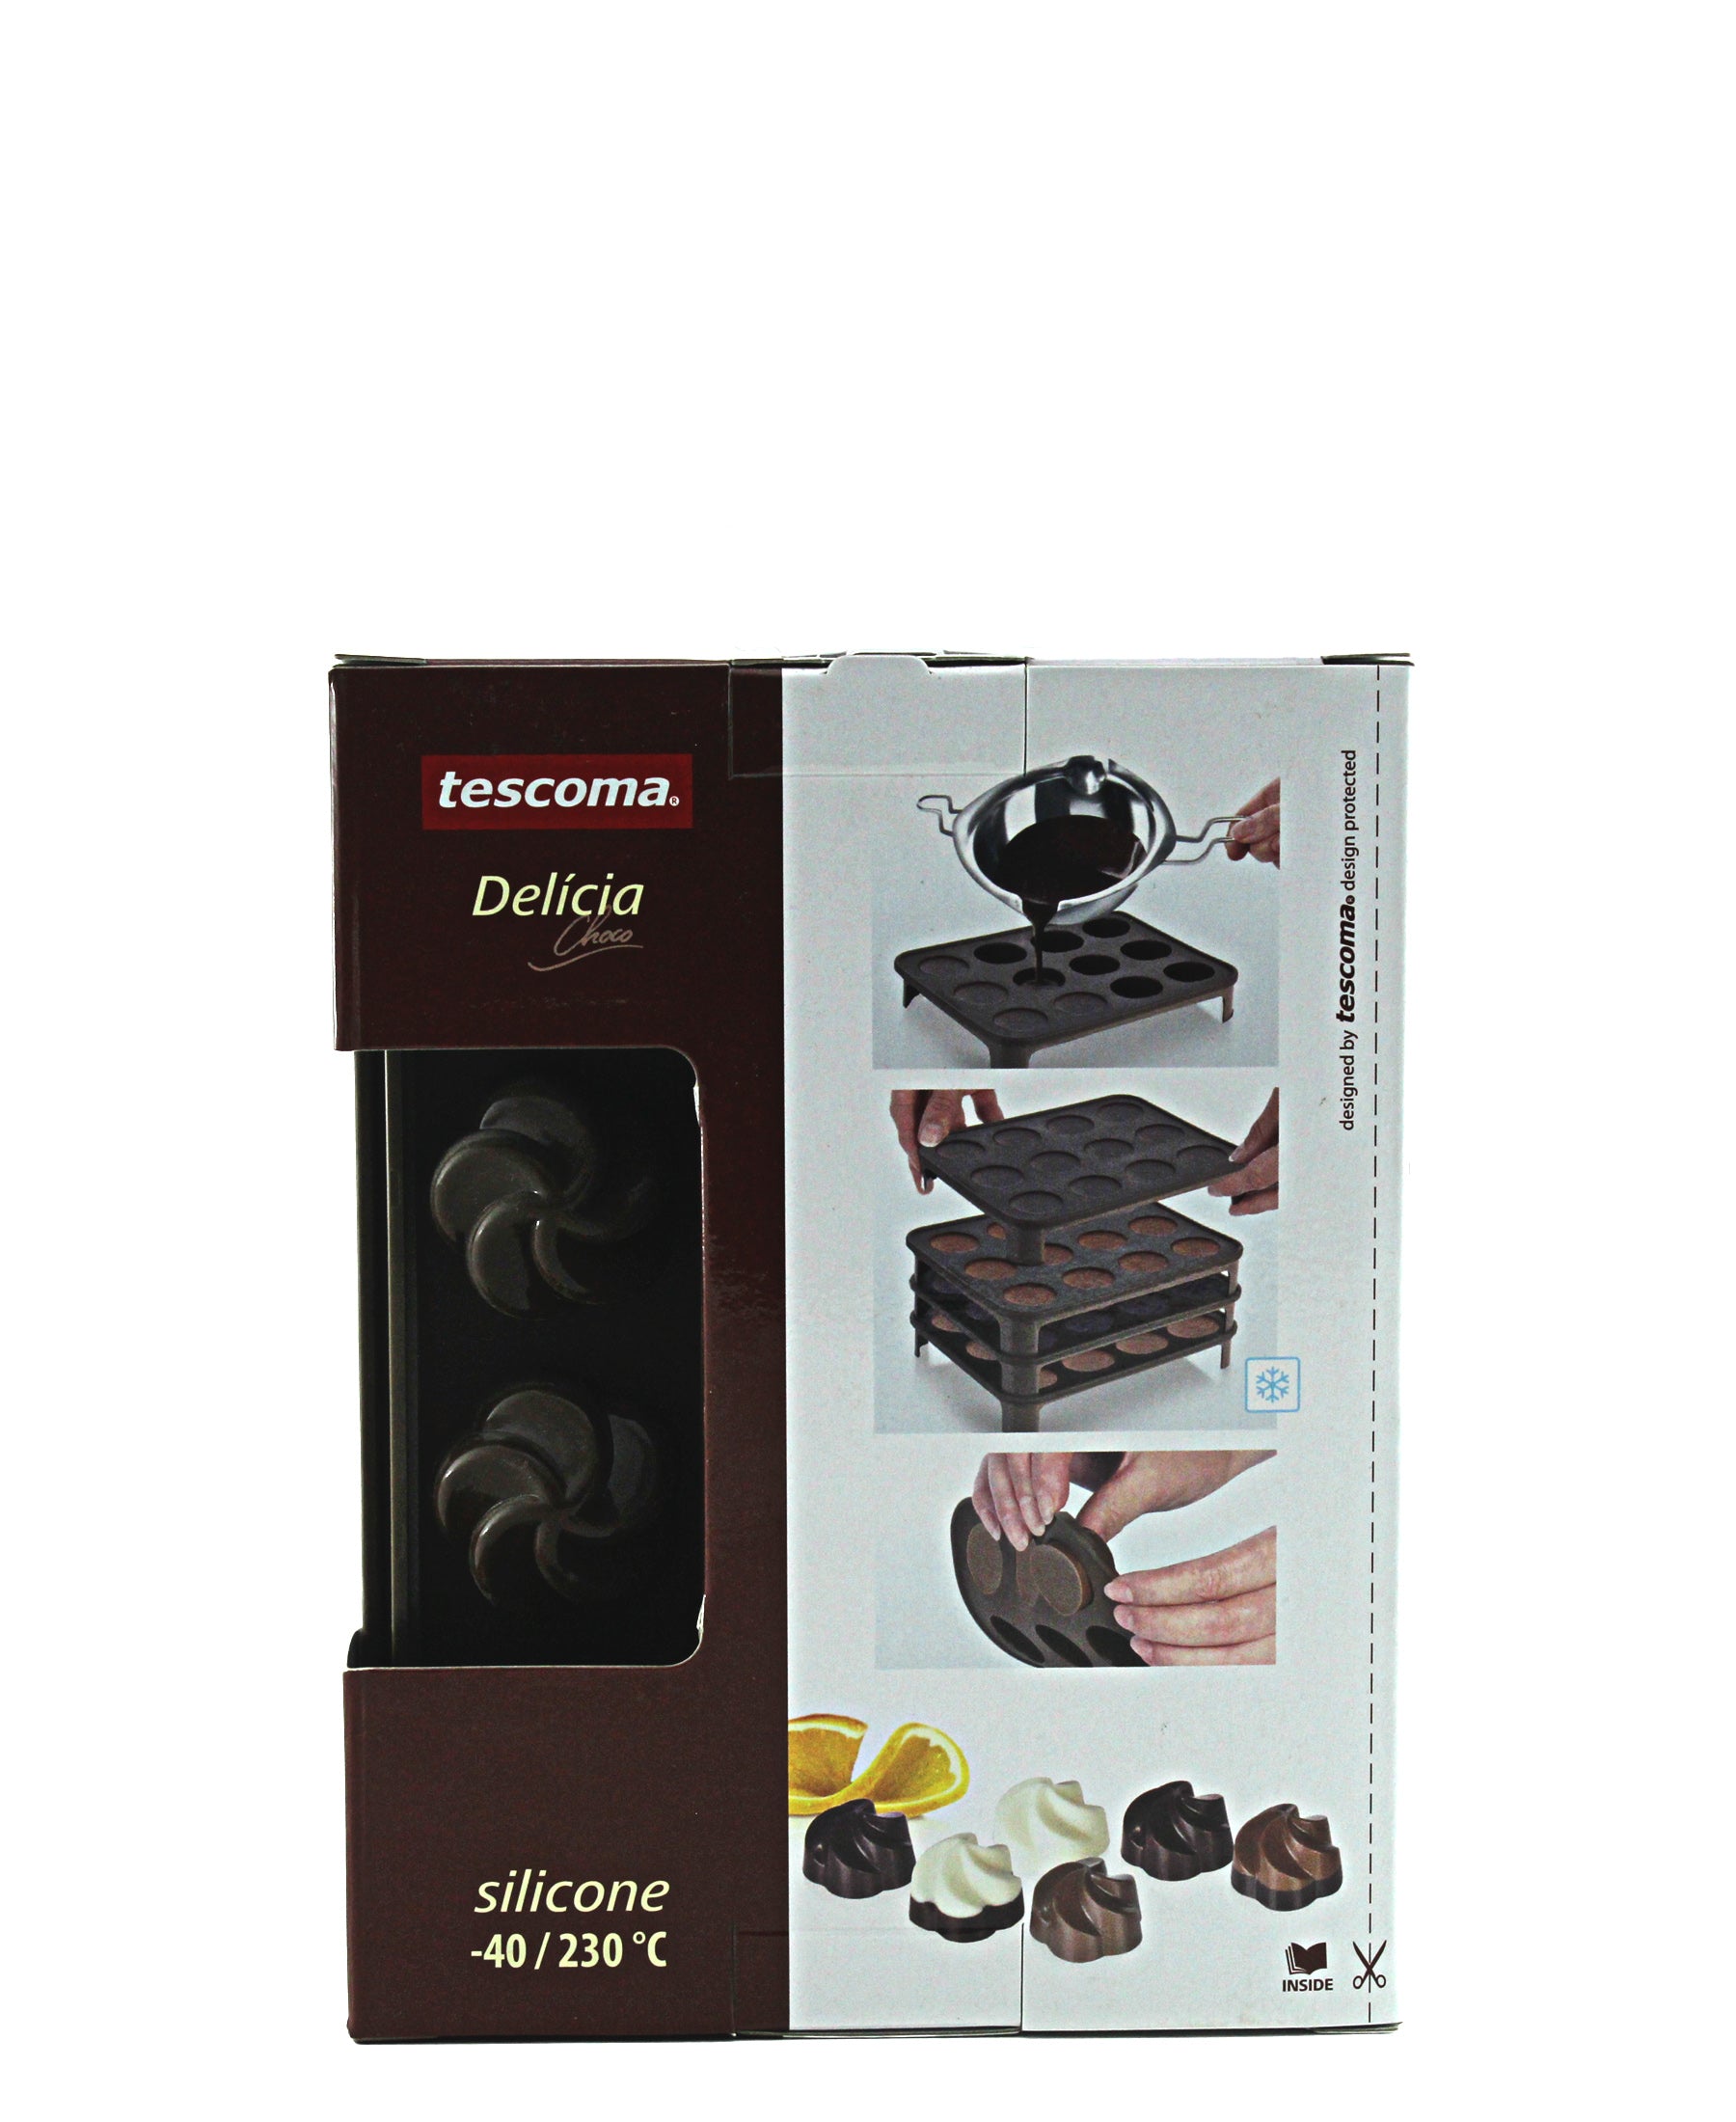 tescoma chocolate mould